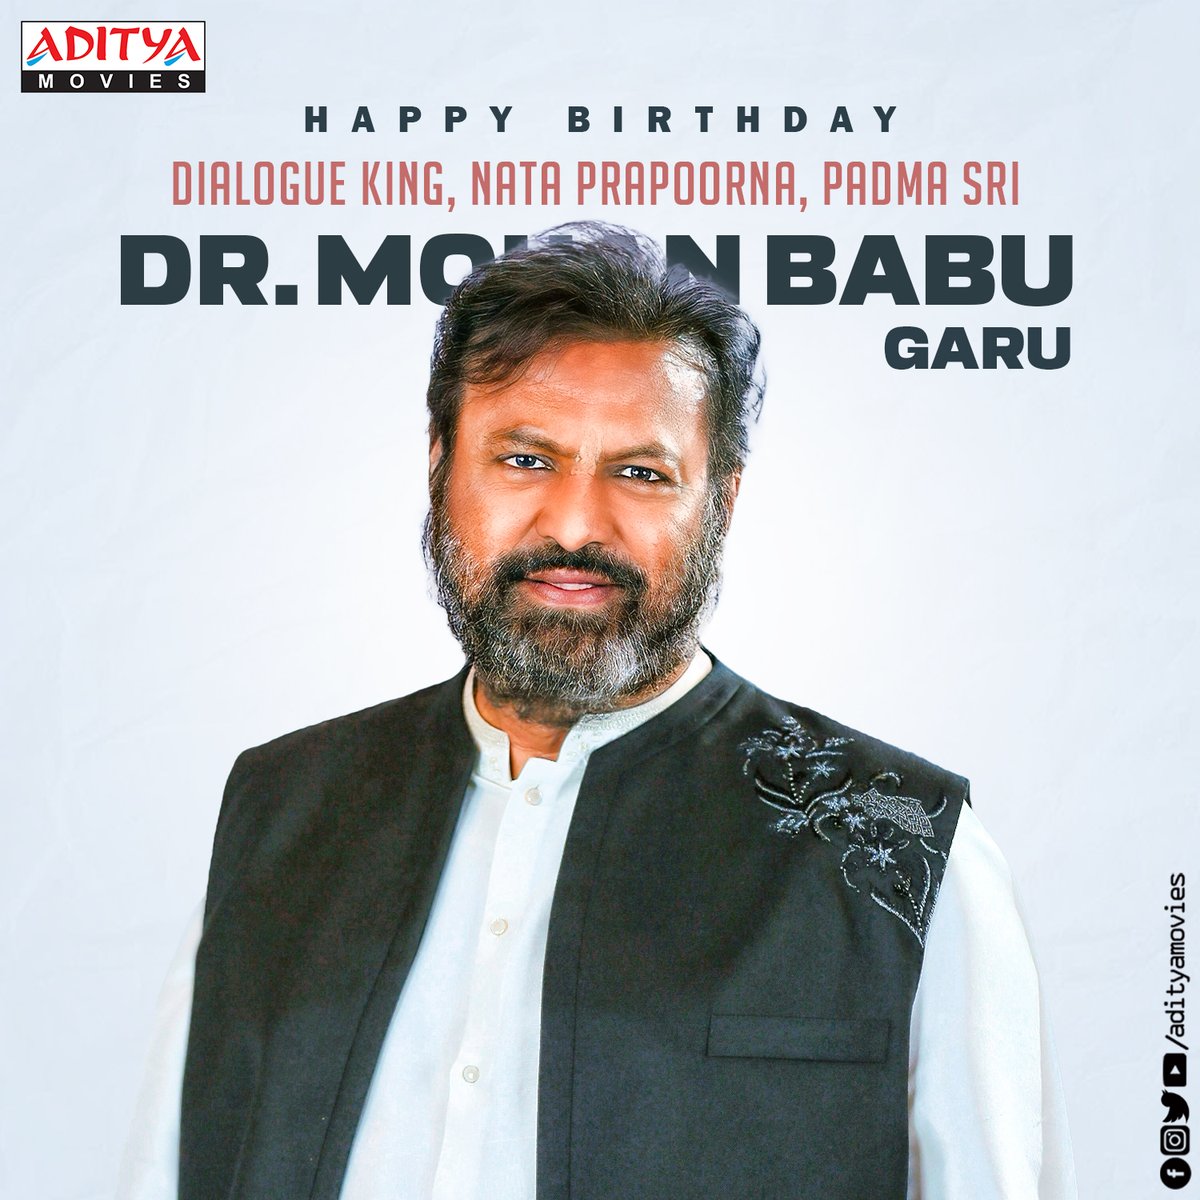 Here's wishing the Dialogue King and Nata Prapoorna Padma shri Mohan babu garu a very Happy Birthday! May you have a healthy year ahead. #HappyBirthdayMohanbabu  #HBDMohanbabu #Adityamovies